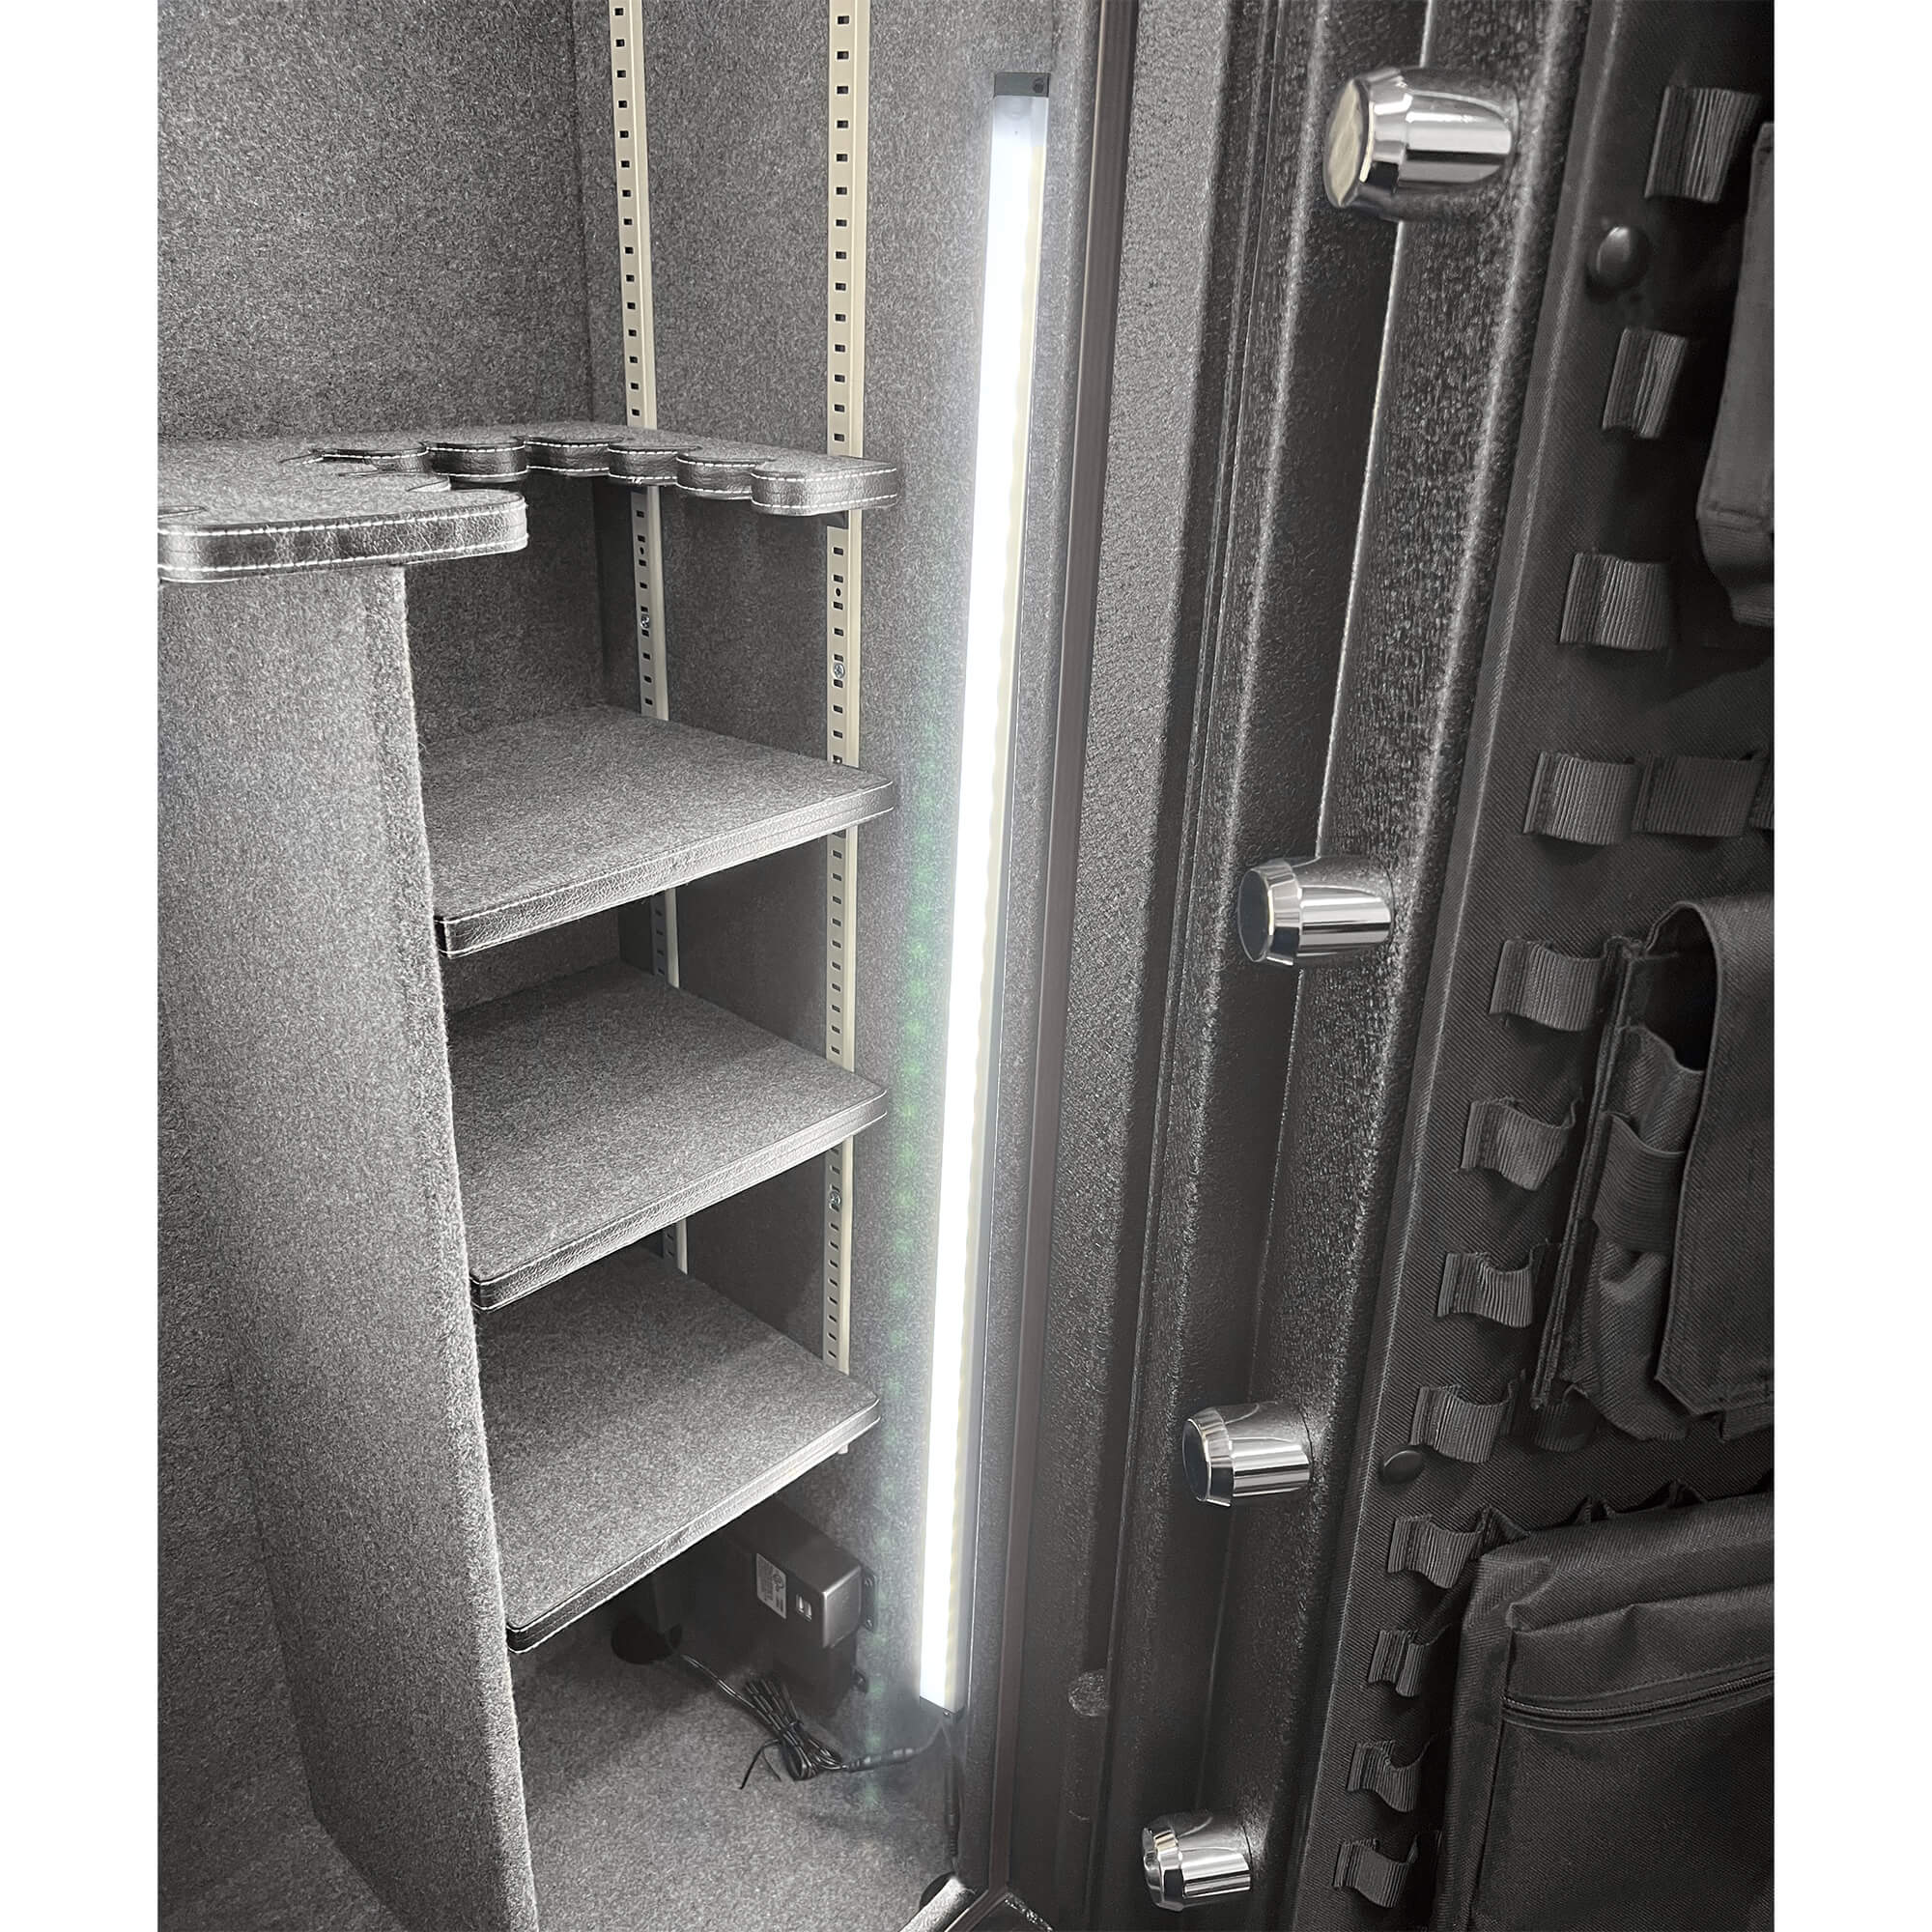 TORCHSTAR LED Safe Lighting Kit for Under Cabinet, Gun Safe, Shelf